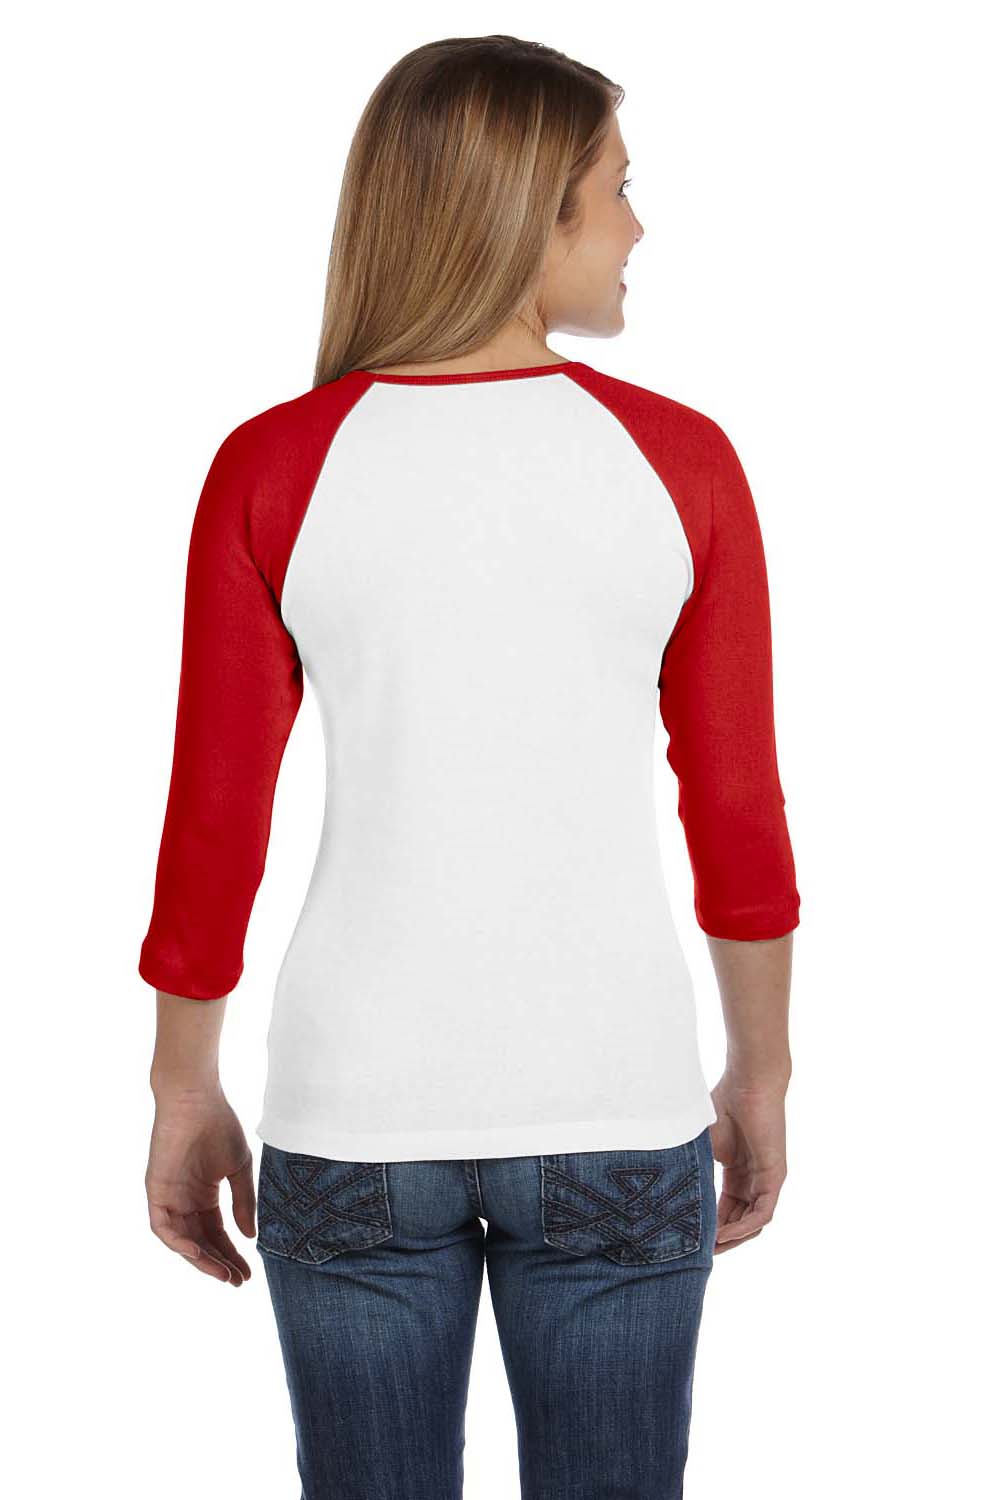 Bella + Canvas B2000 Womens 3/4 Sleeve Crewneck T-Shirt White/Red Back